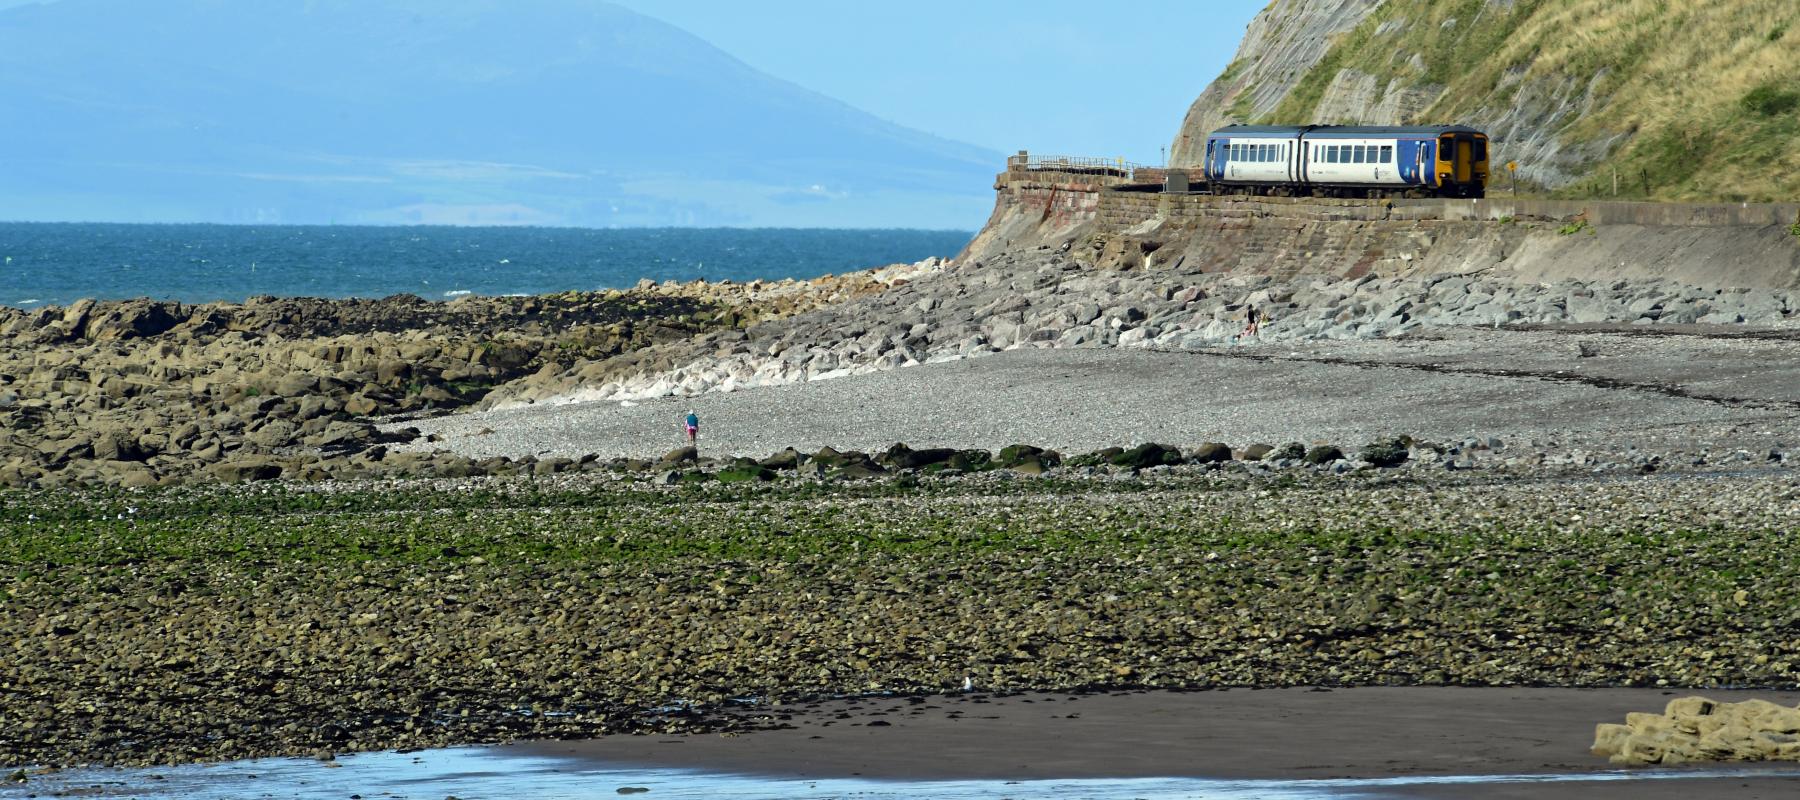 Explore the Cumbrian coast by rail